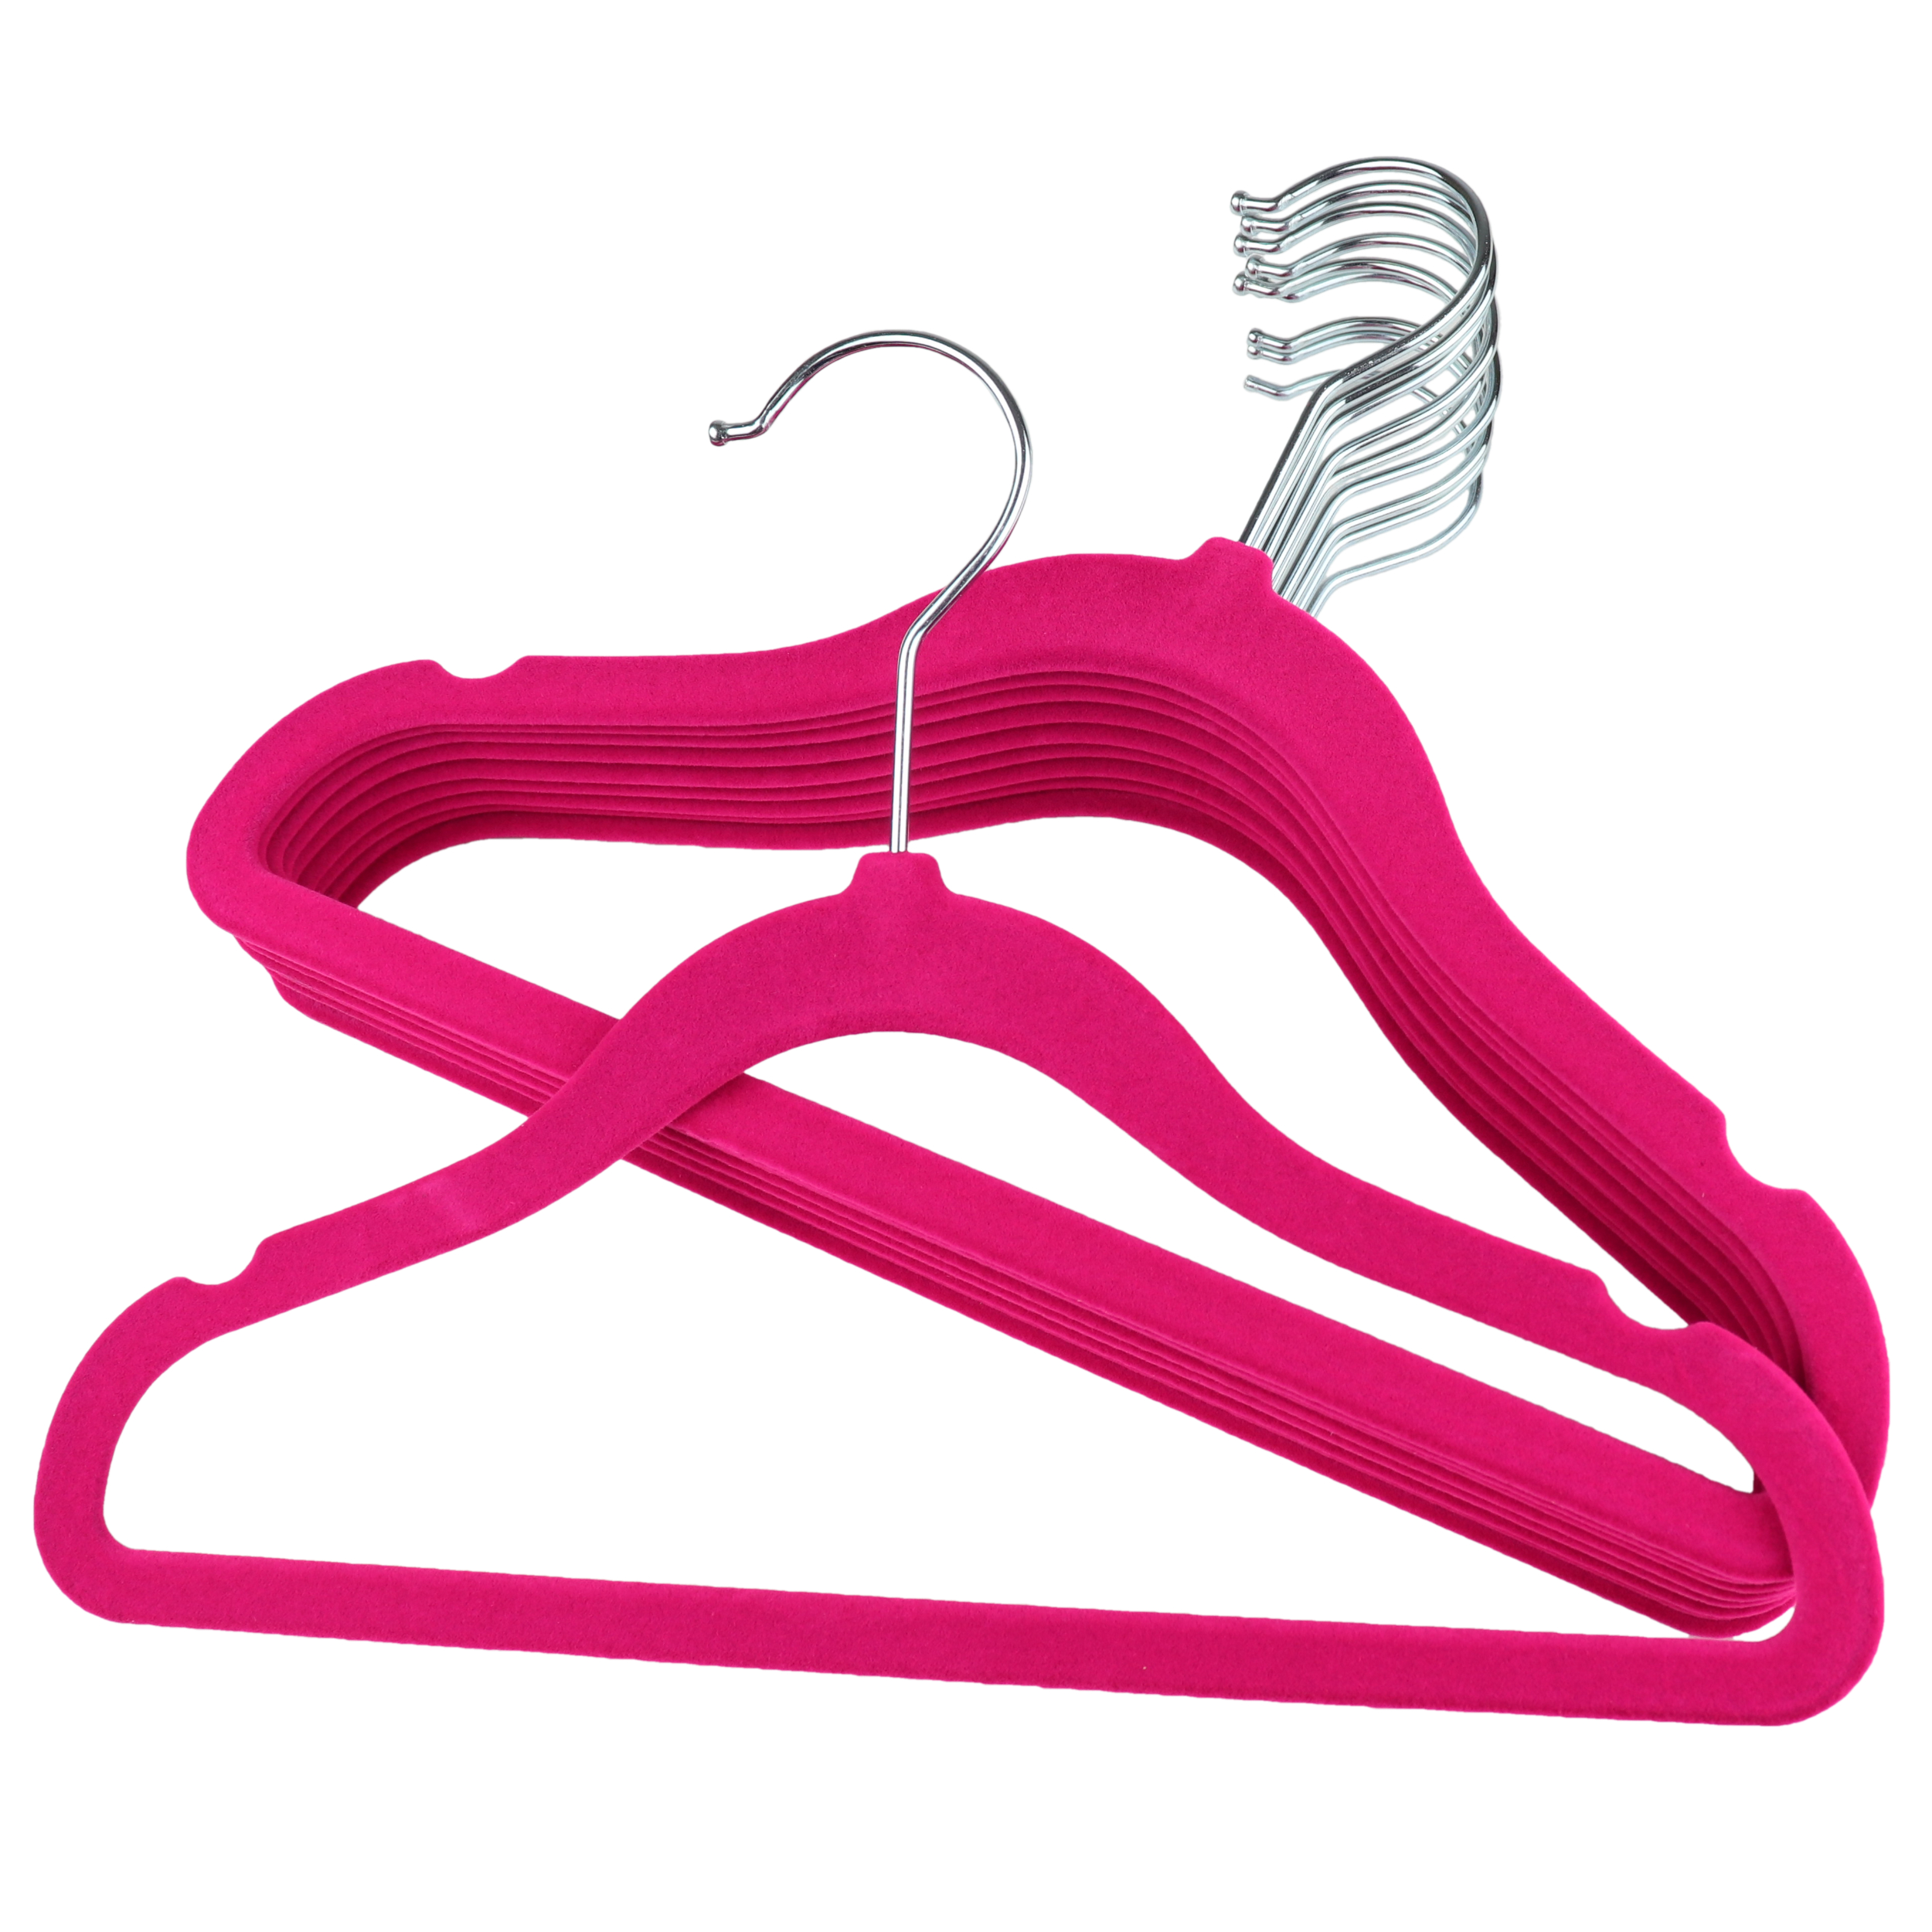 Children's Slim-Line Hot Pink Hanger